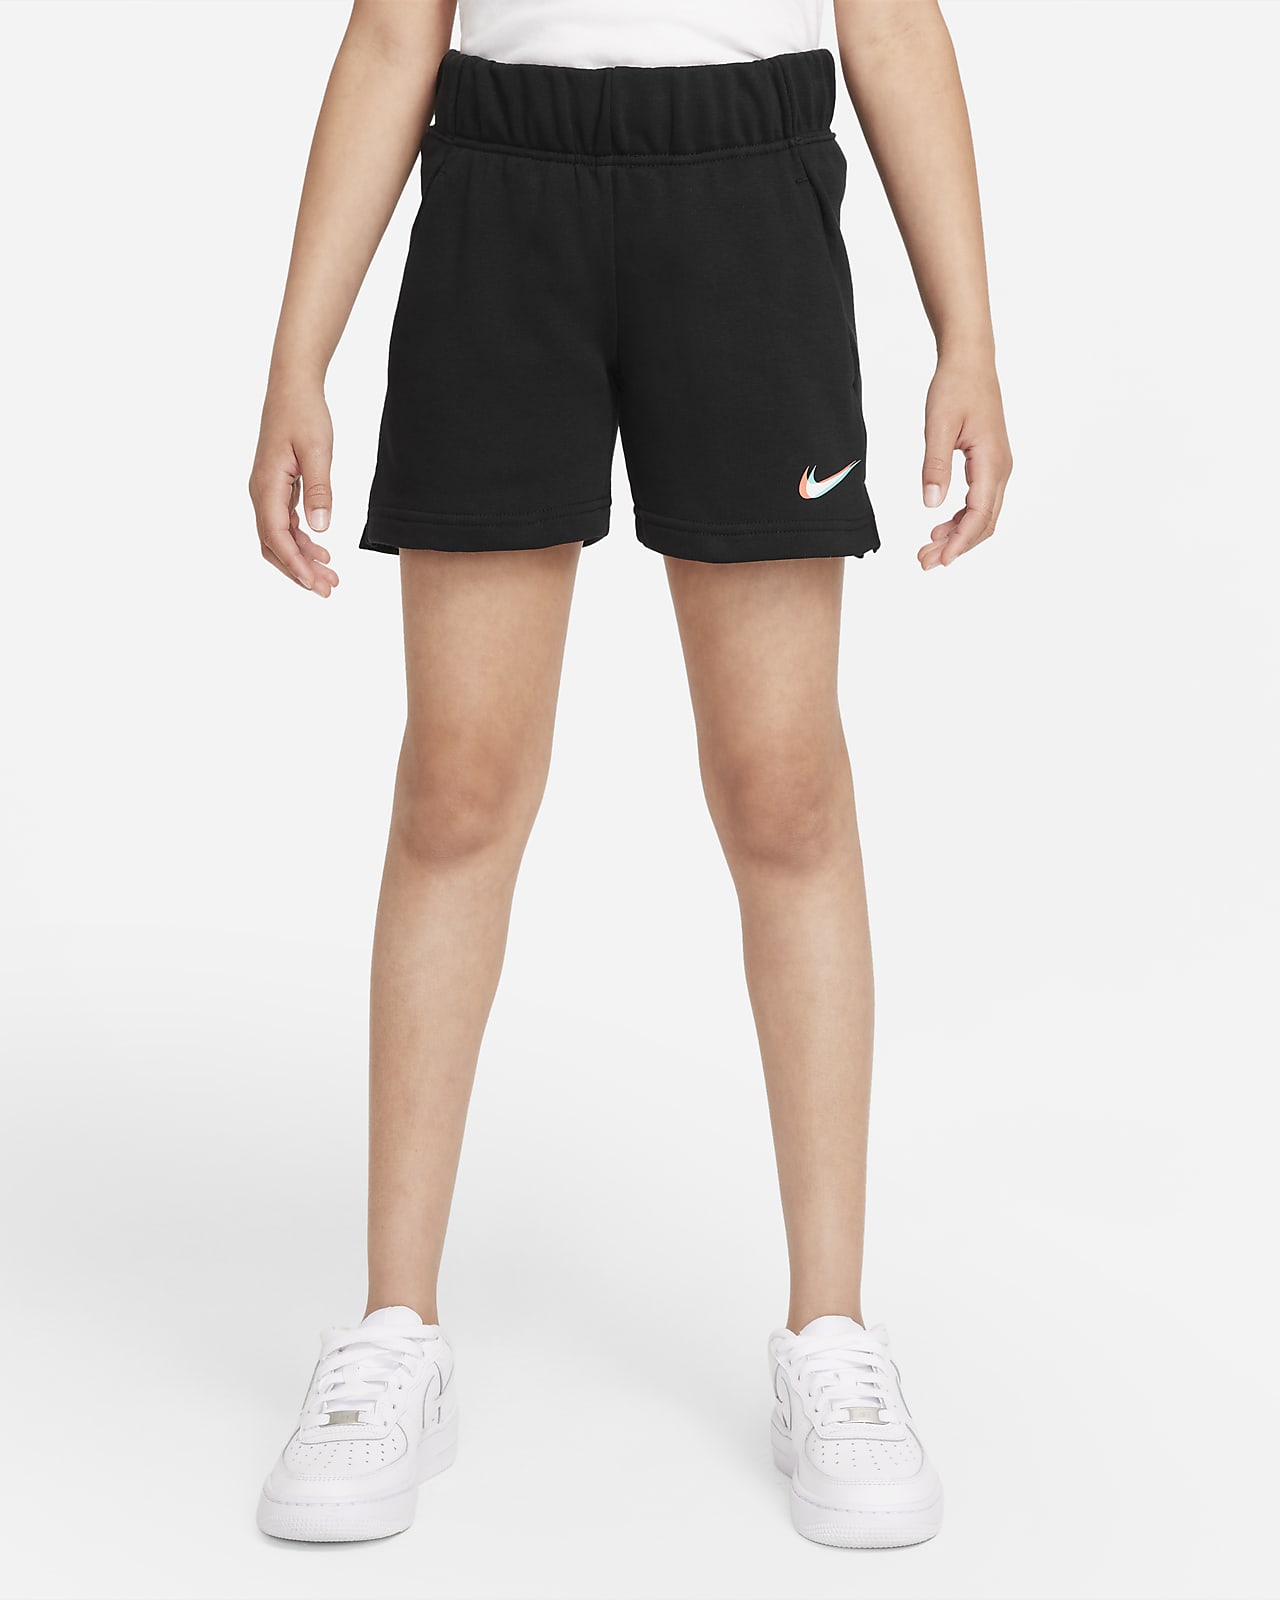 Nike Sportswear Older Kids' (Girls') French Terry Dance Shorts